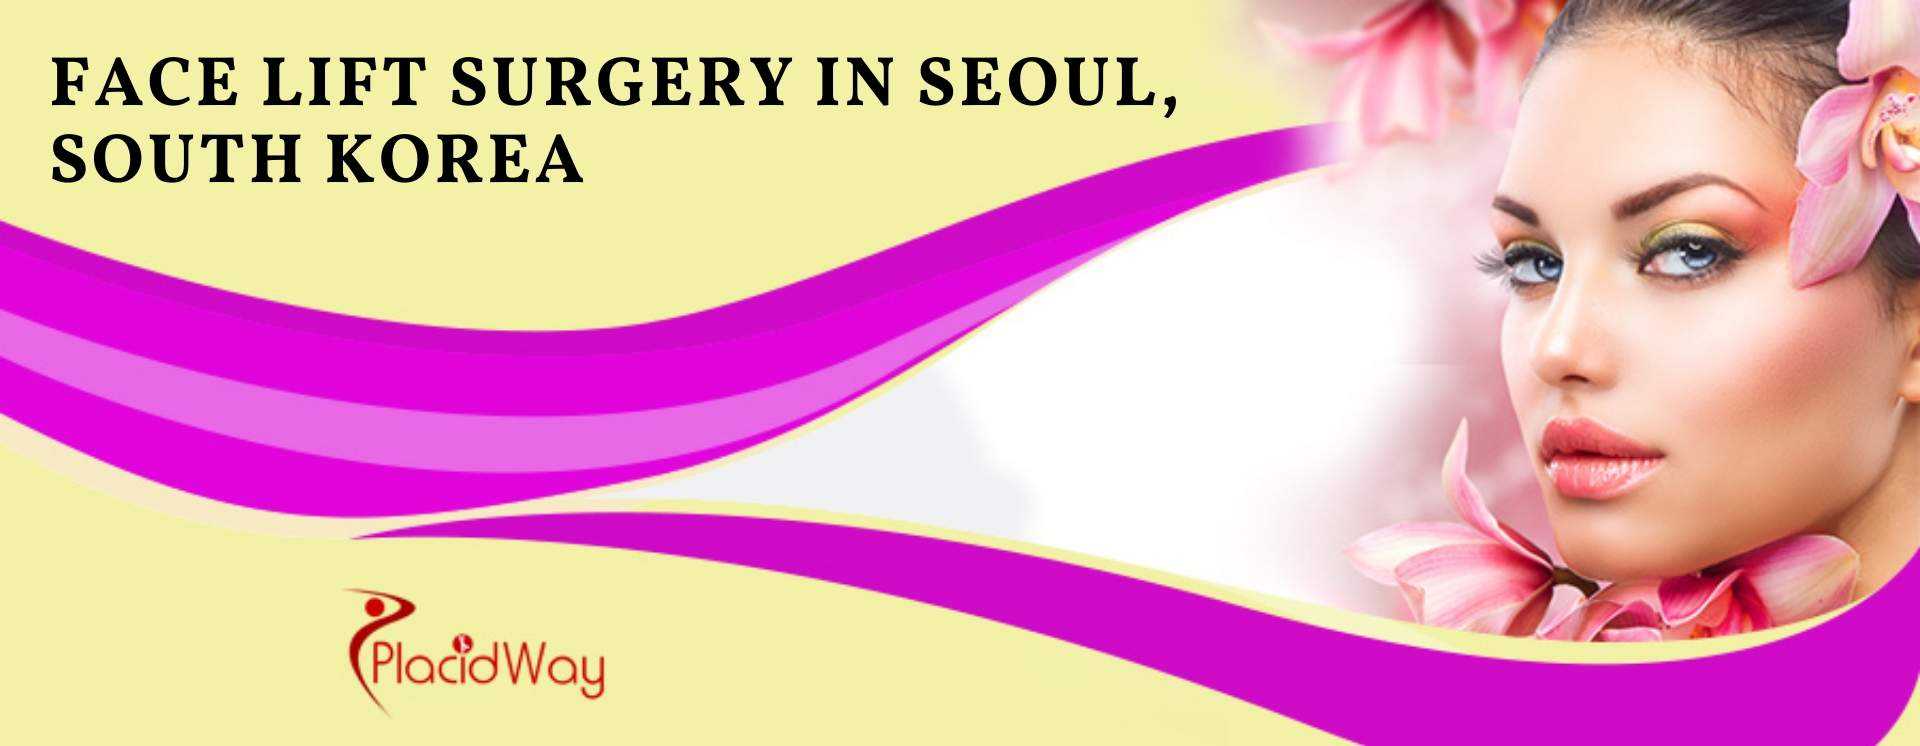 Face Lift Surgery in Seoul, South Korea